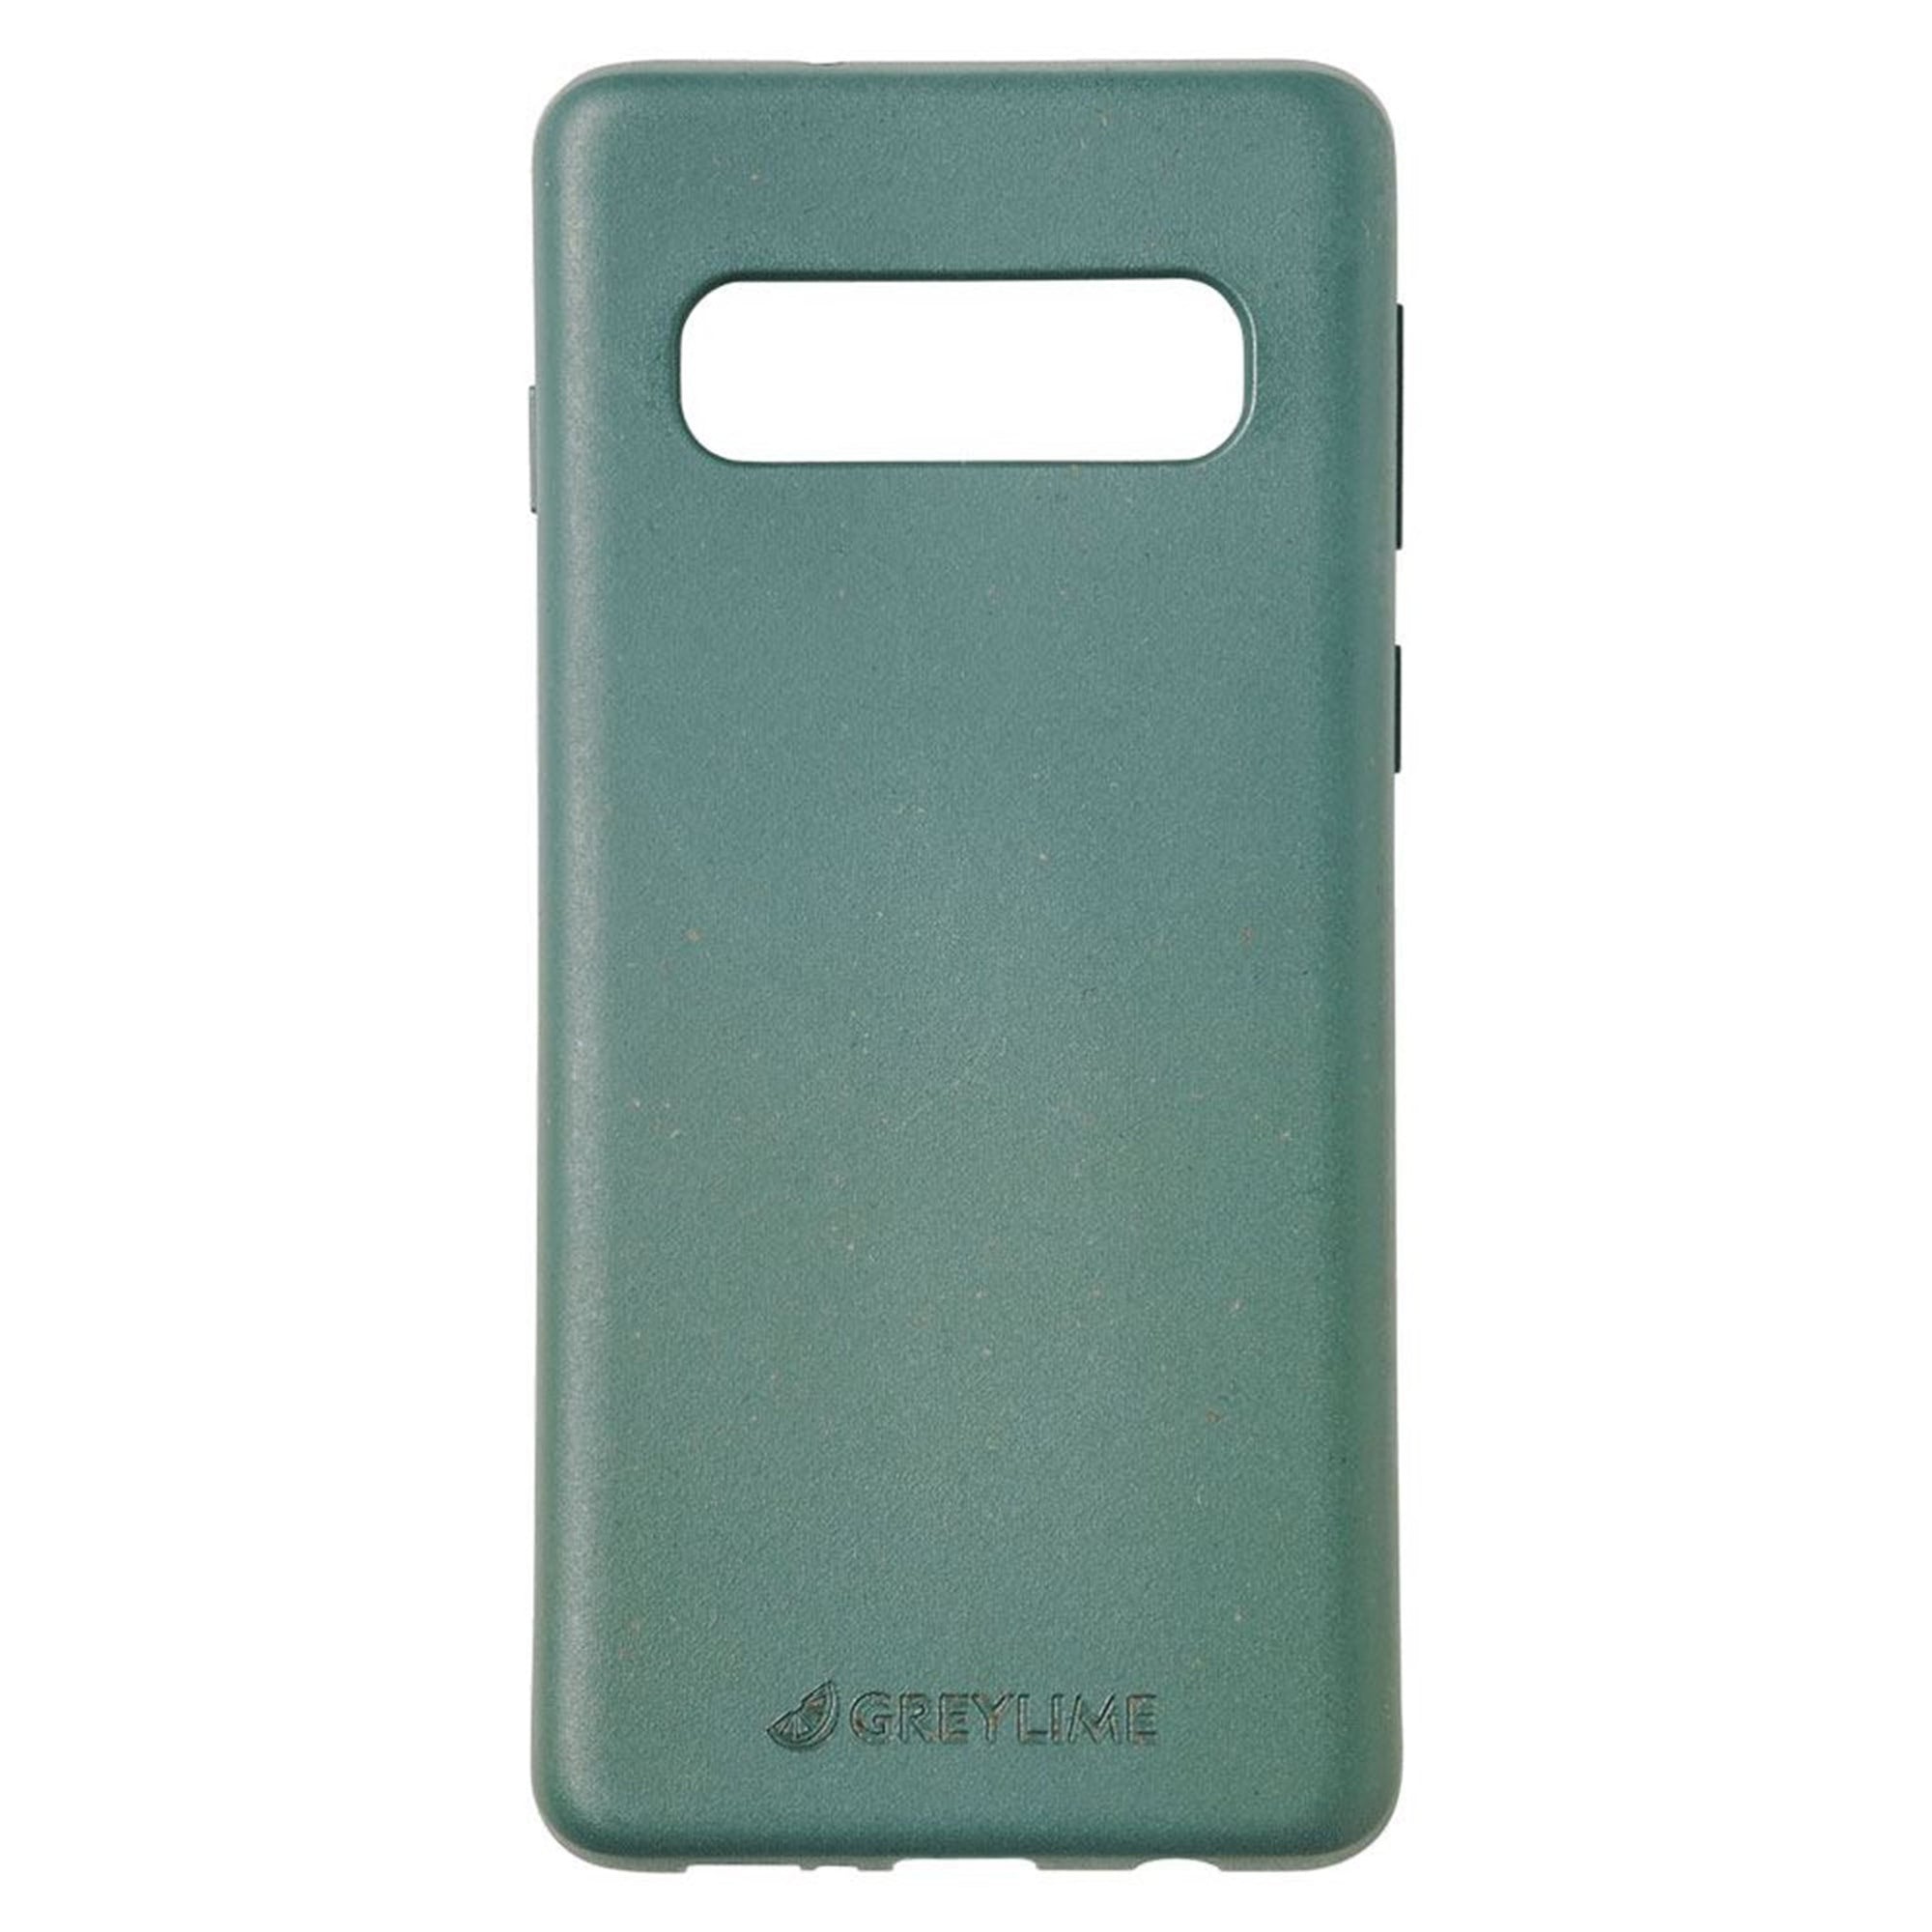 GreyLime-Samsung-Galaxy-S10-Plus-biodegradable-cover-Dark-green-COSAM10P04-V4.jpg